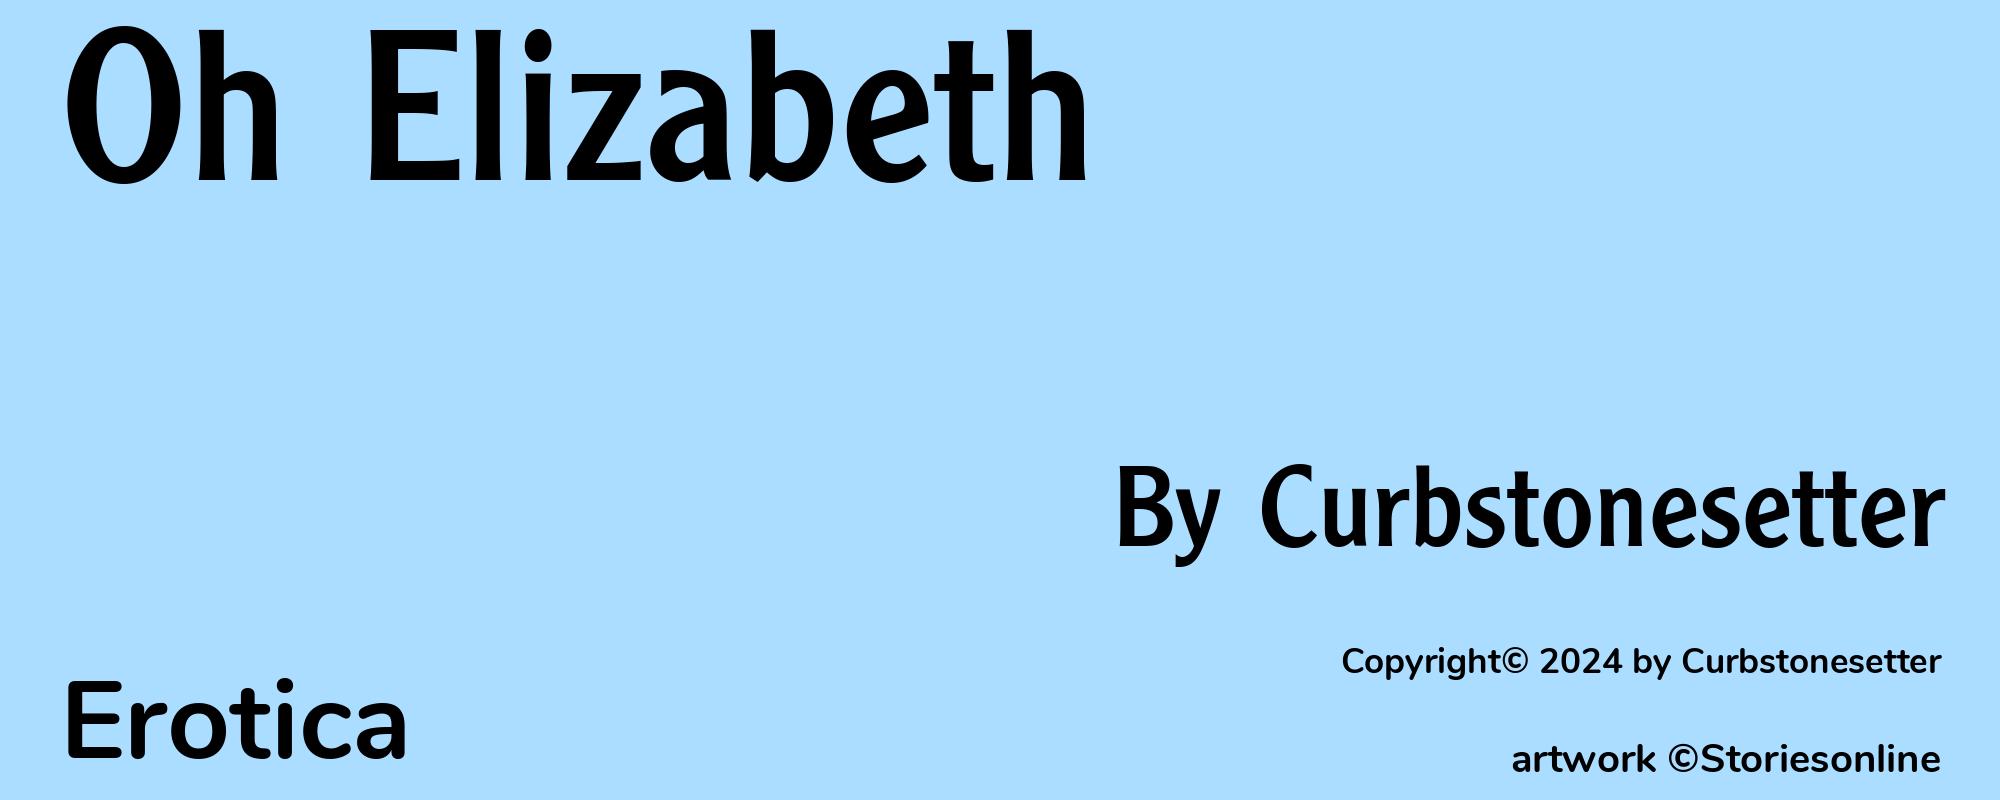 Oh Elizabeth - Cover